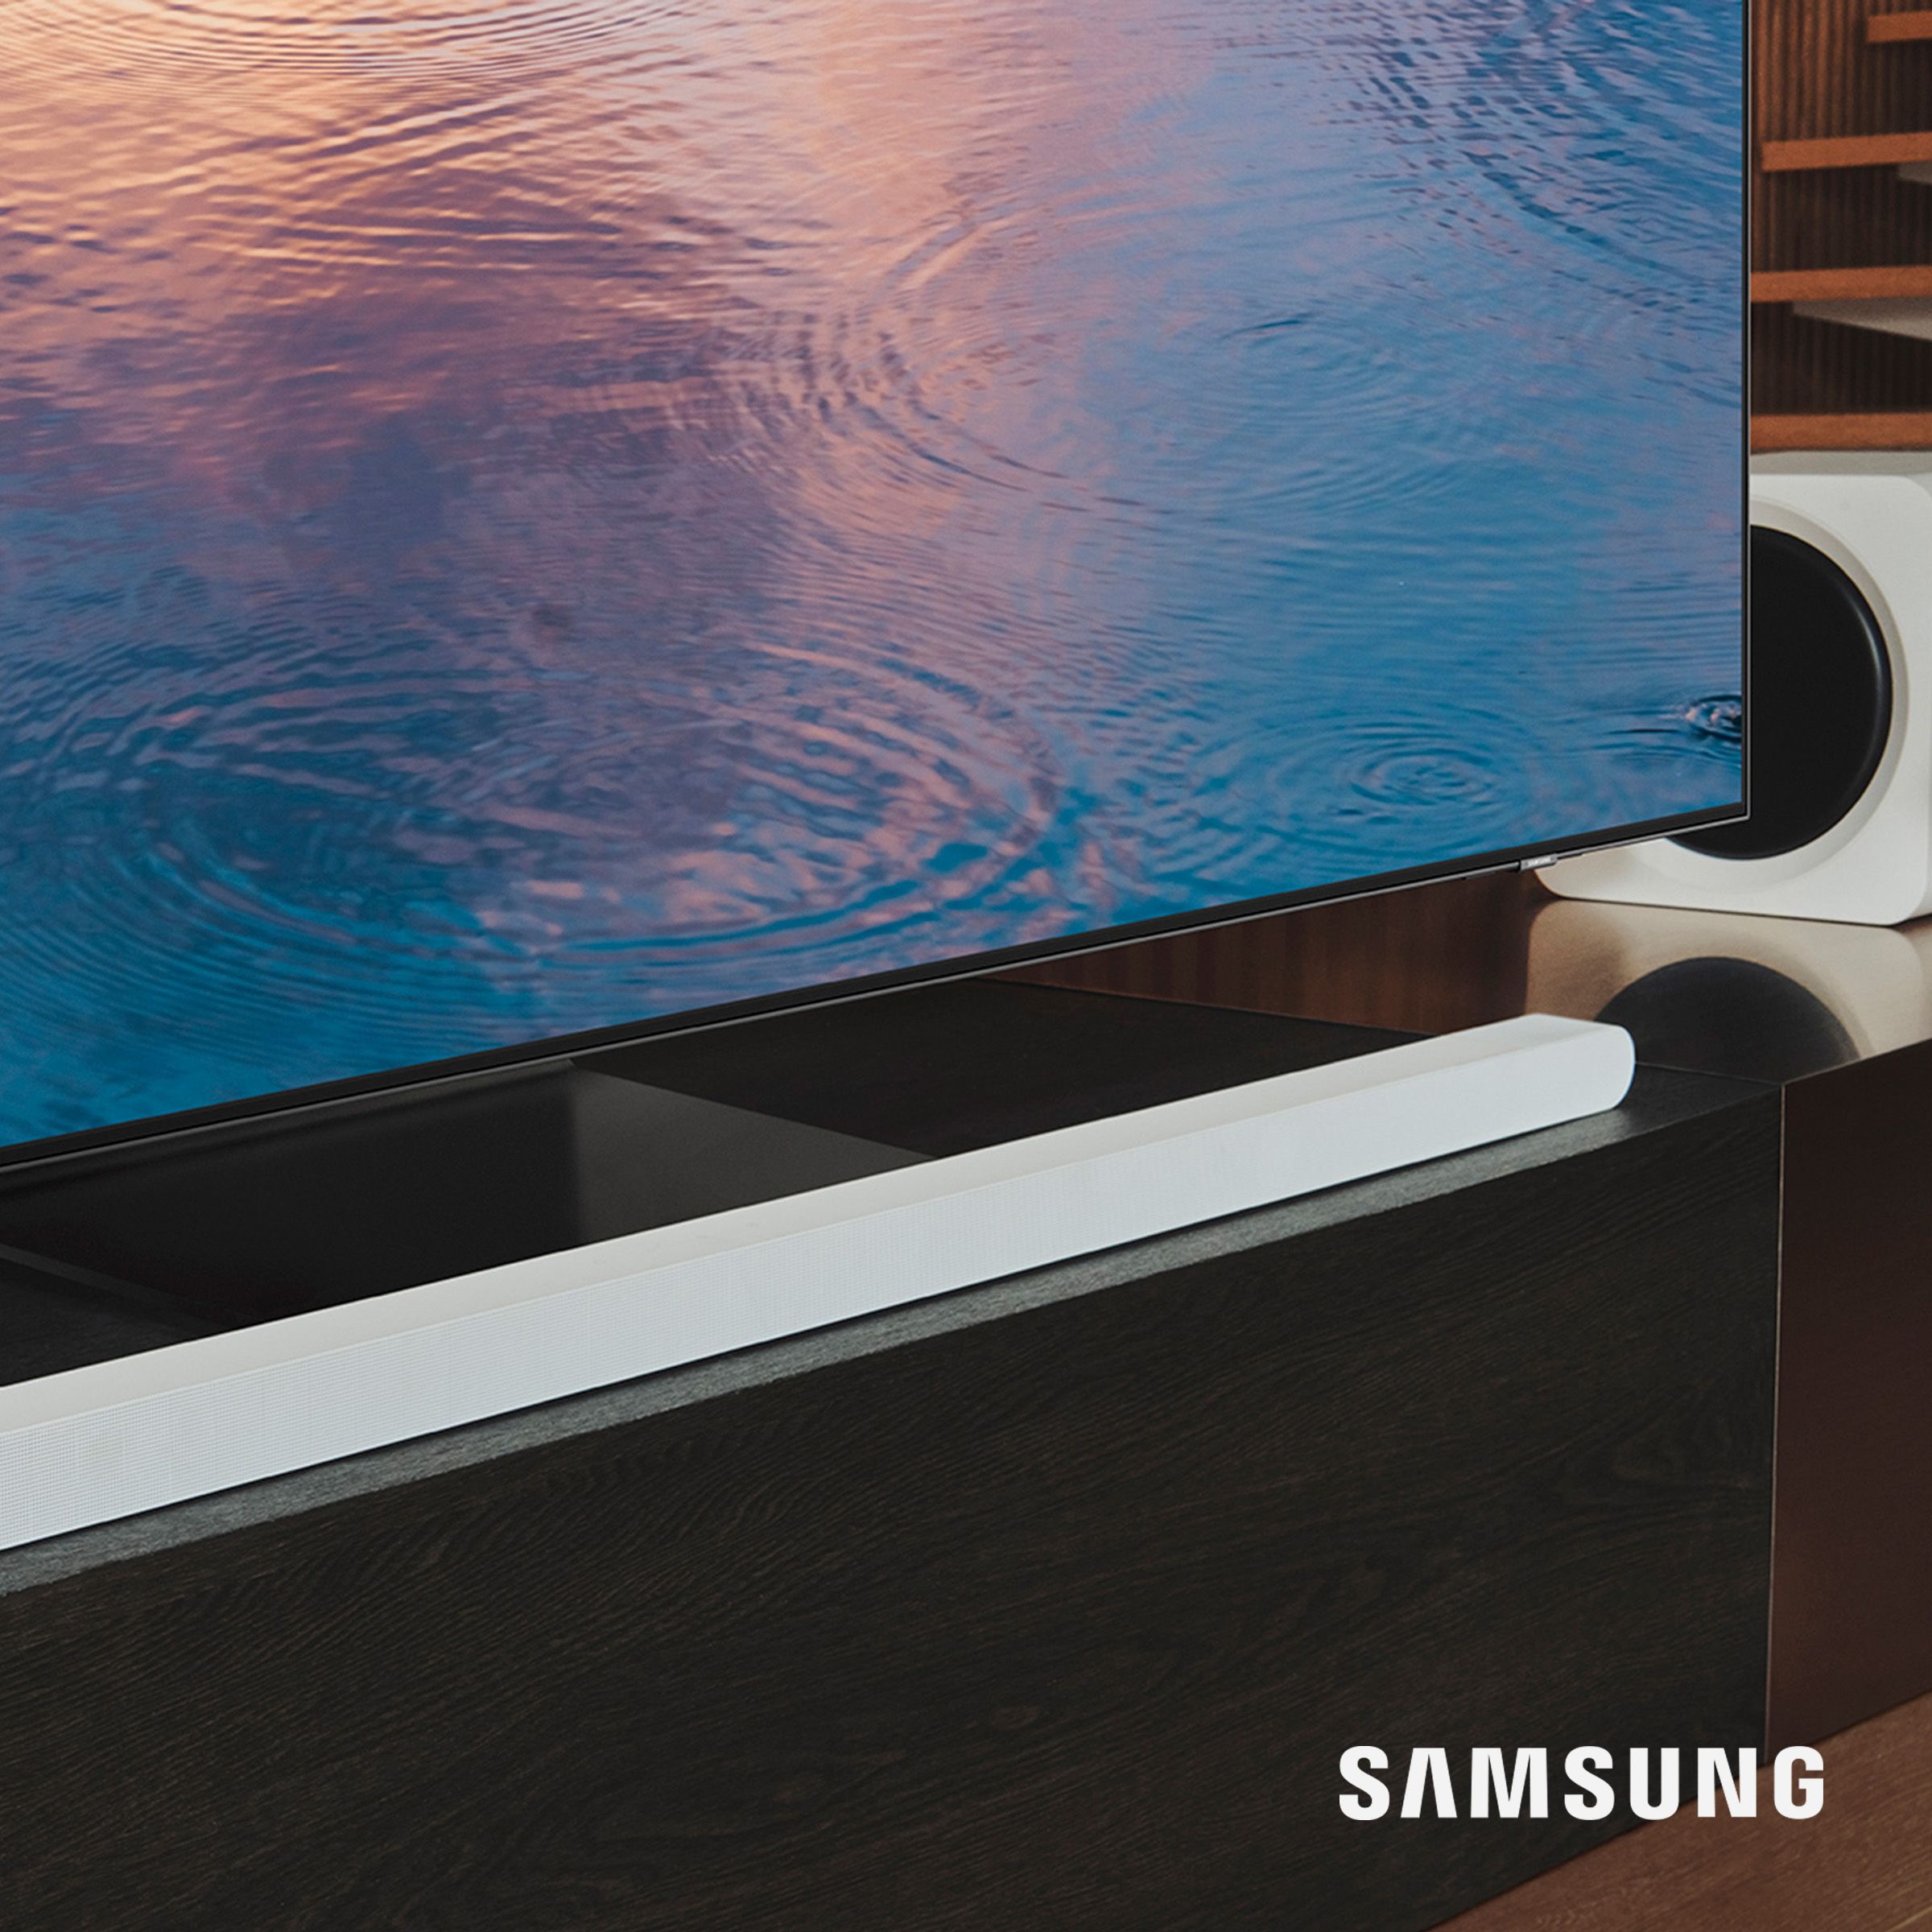 OLED Samsung TV's and soundbars